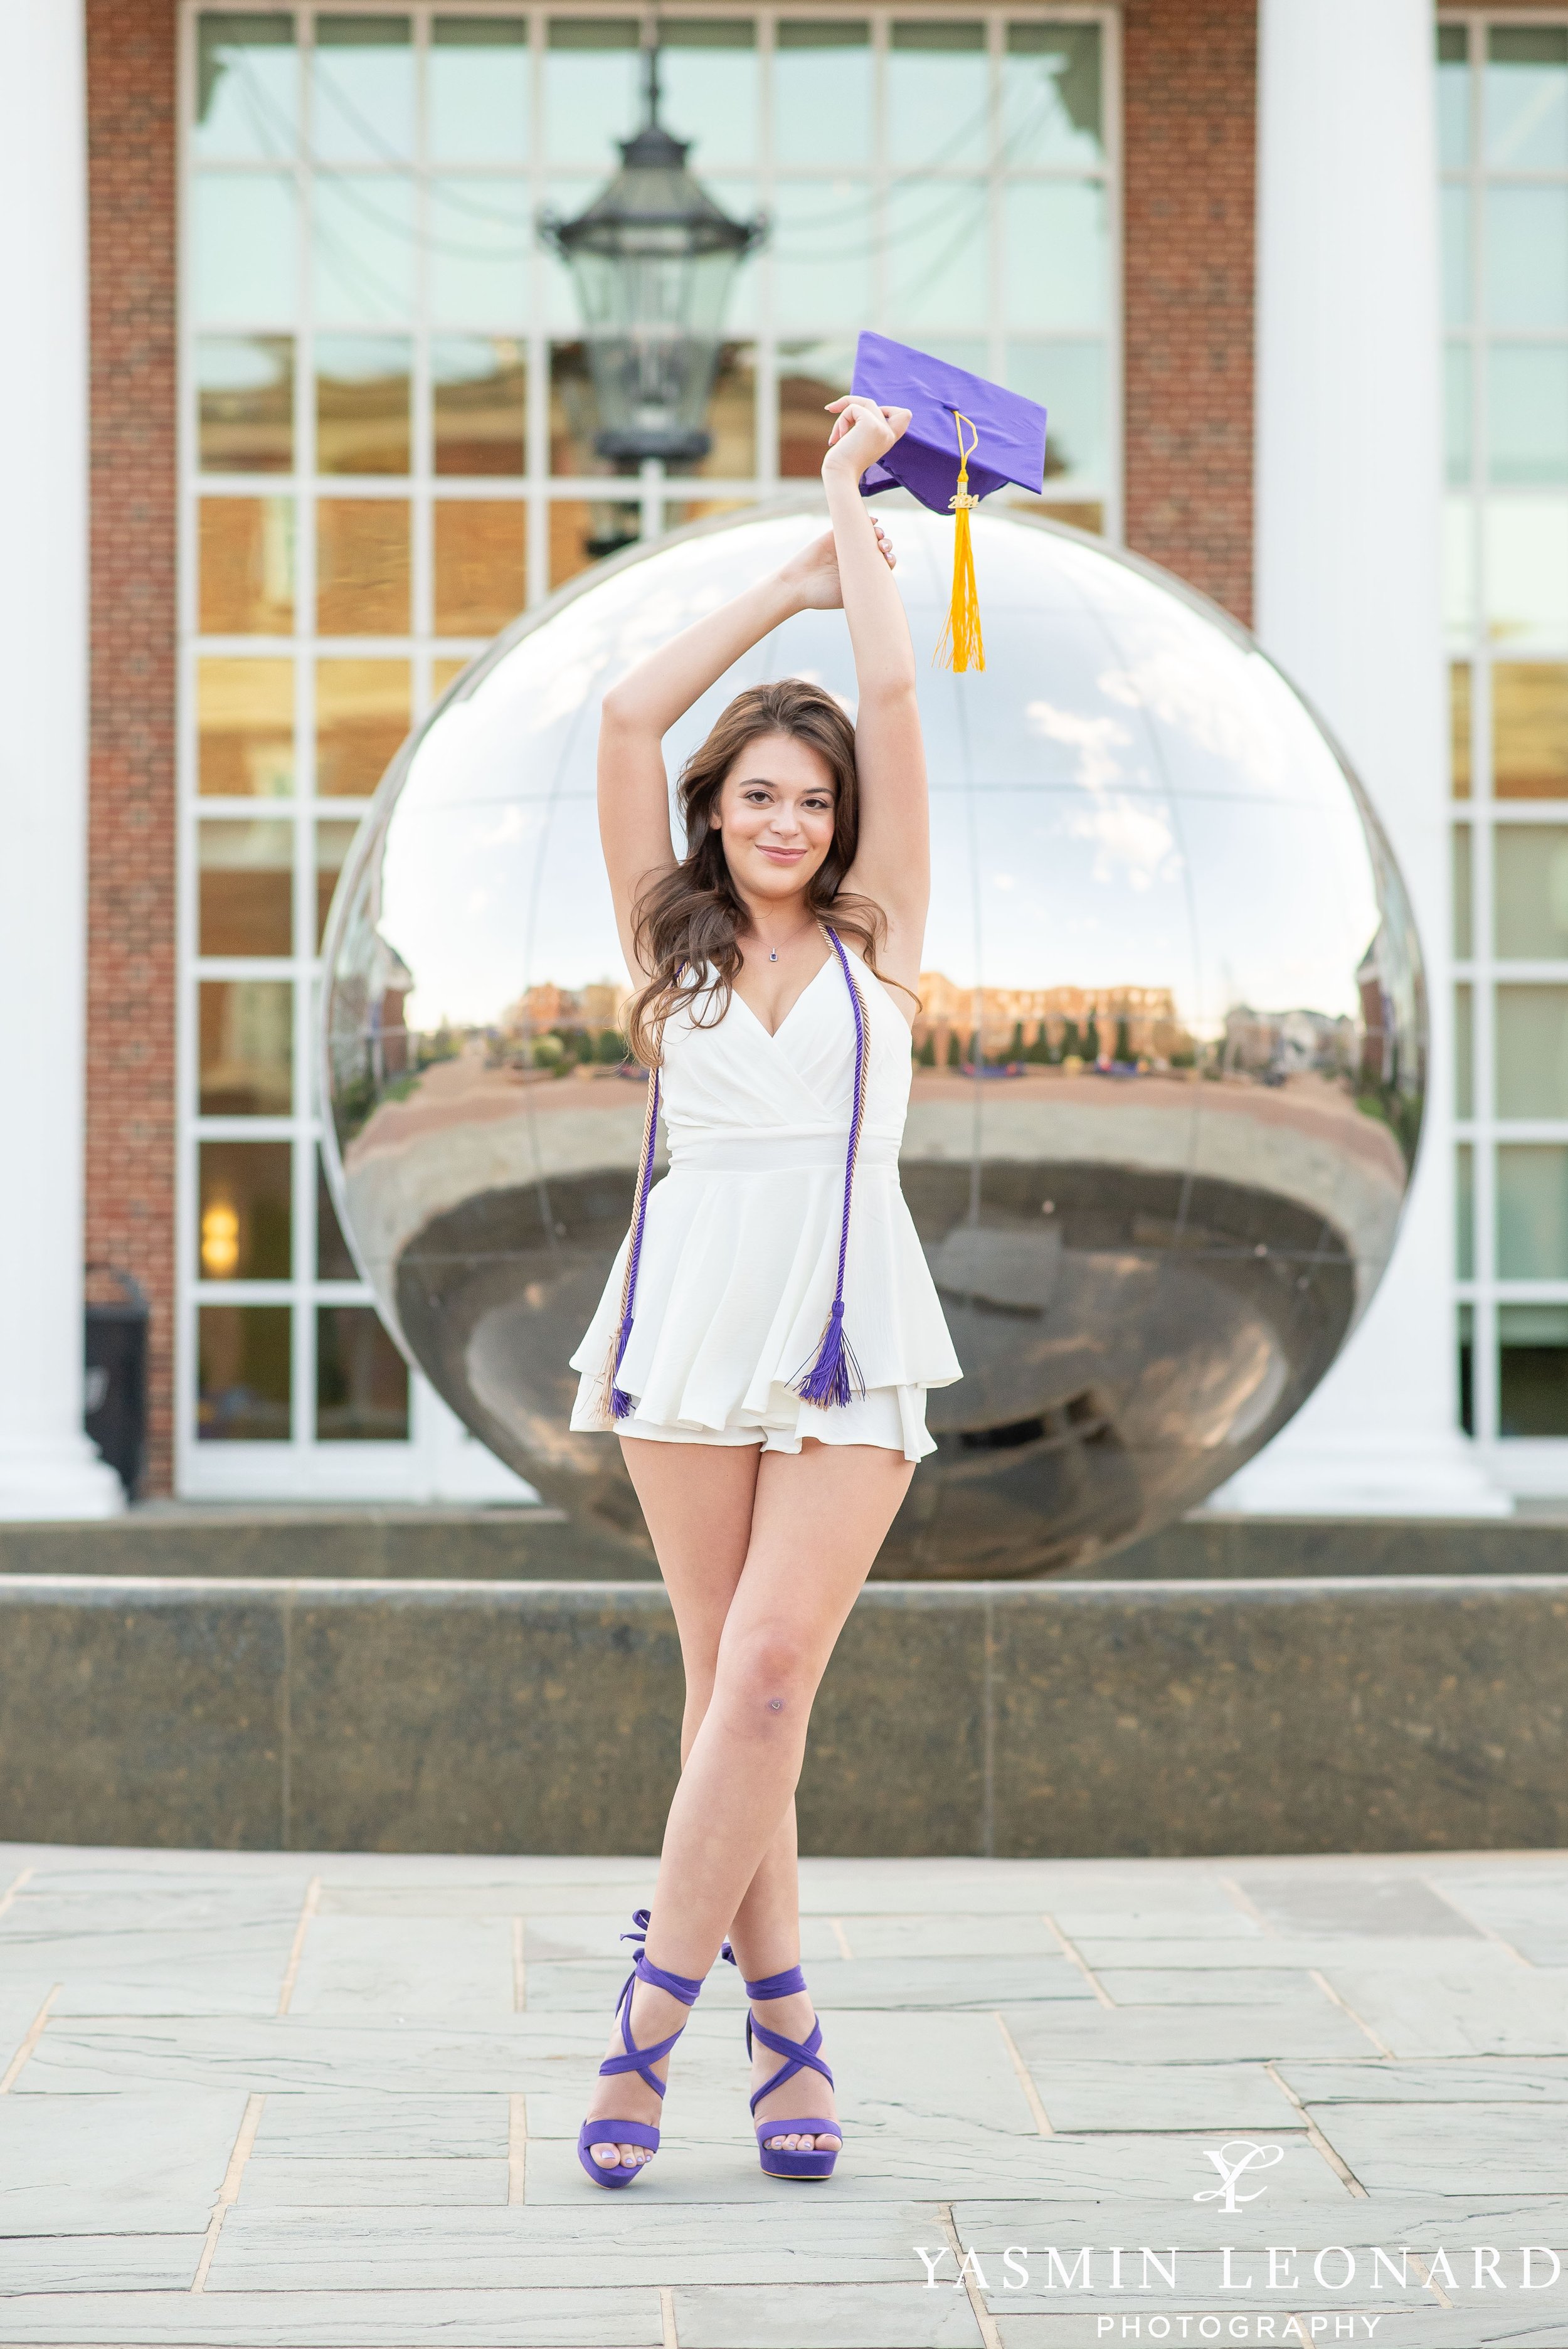 HPU Grad - HPU Graduation Photos - Grad Portraits at HPU - High Point University Photogarpher - Yasmin Leonard Photography 2024-4.jpg